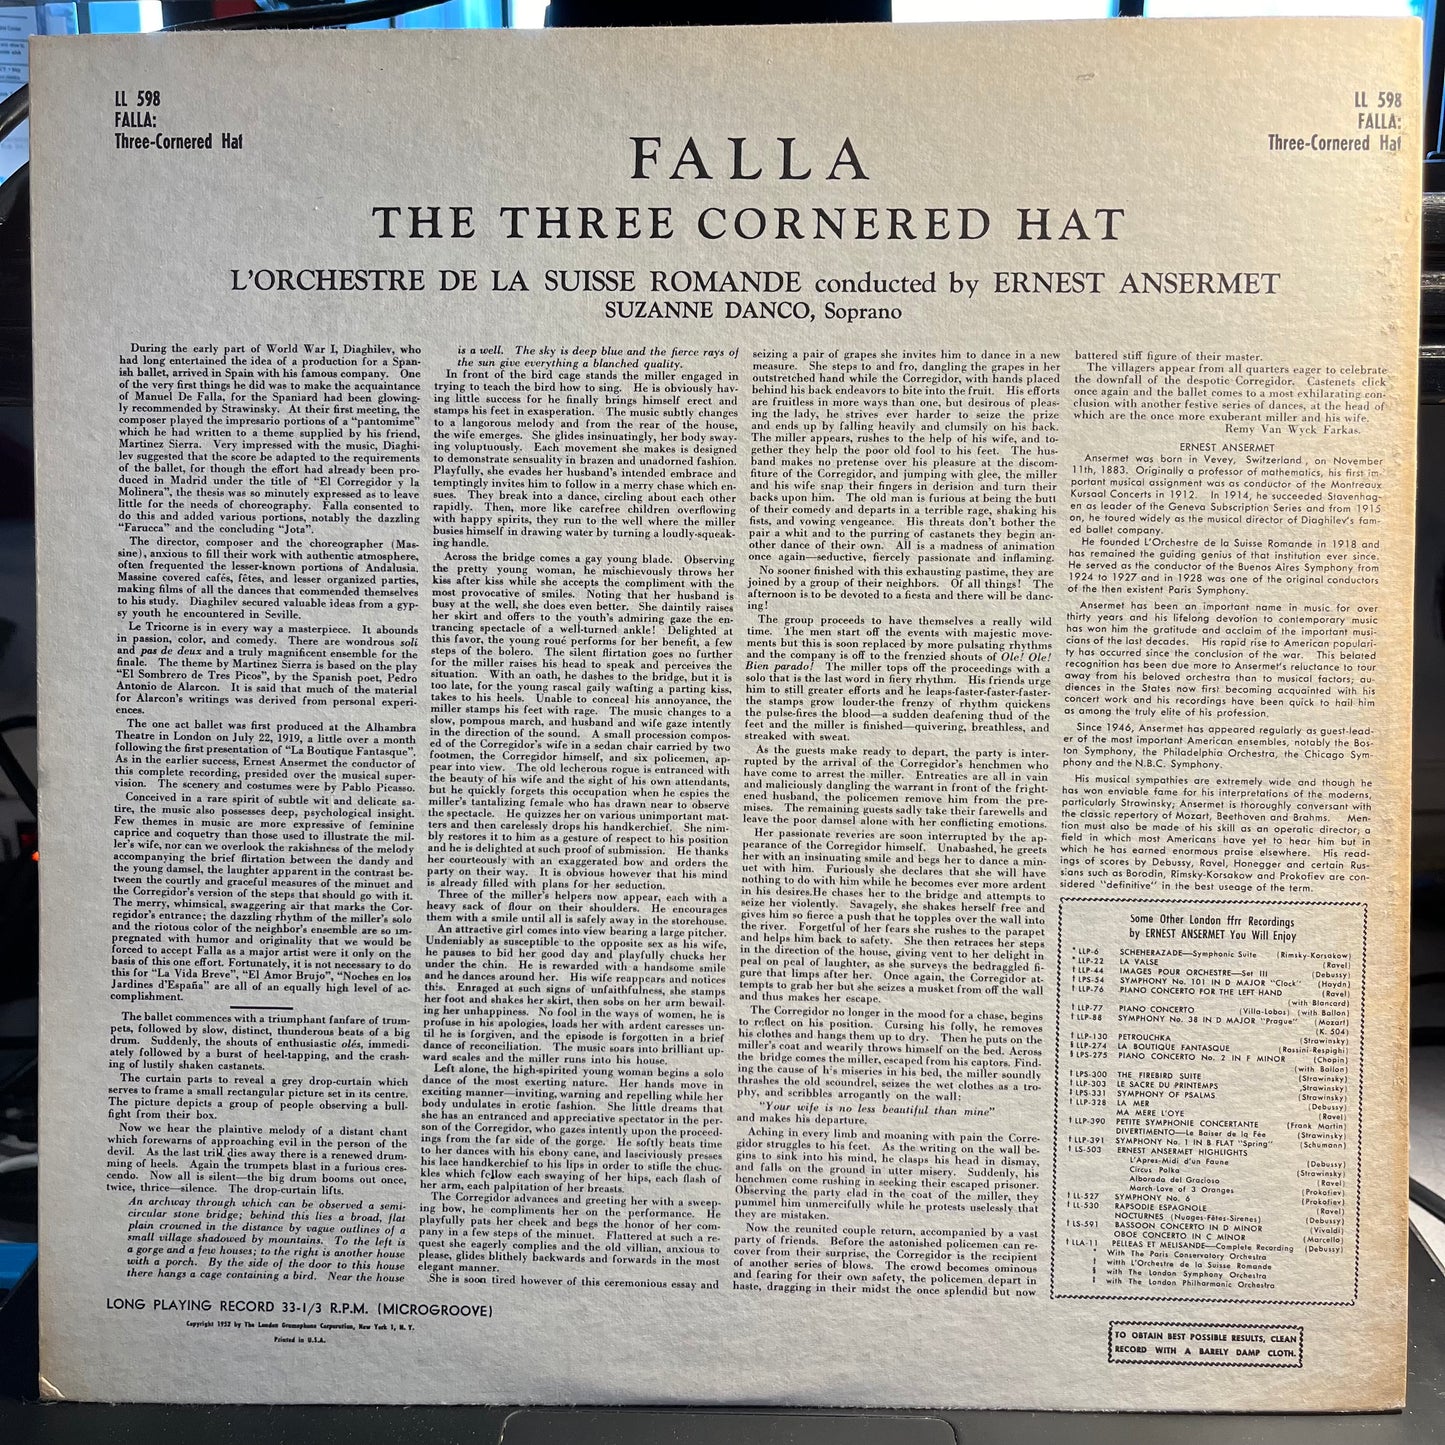 Manuel De Falla The Three Cornered Hat LP Excellent (EX) Near Mint (NM or M-)